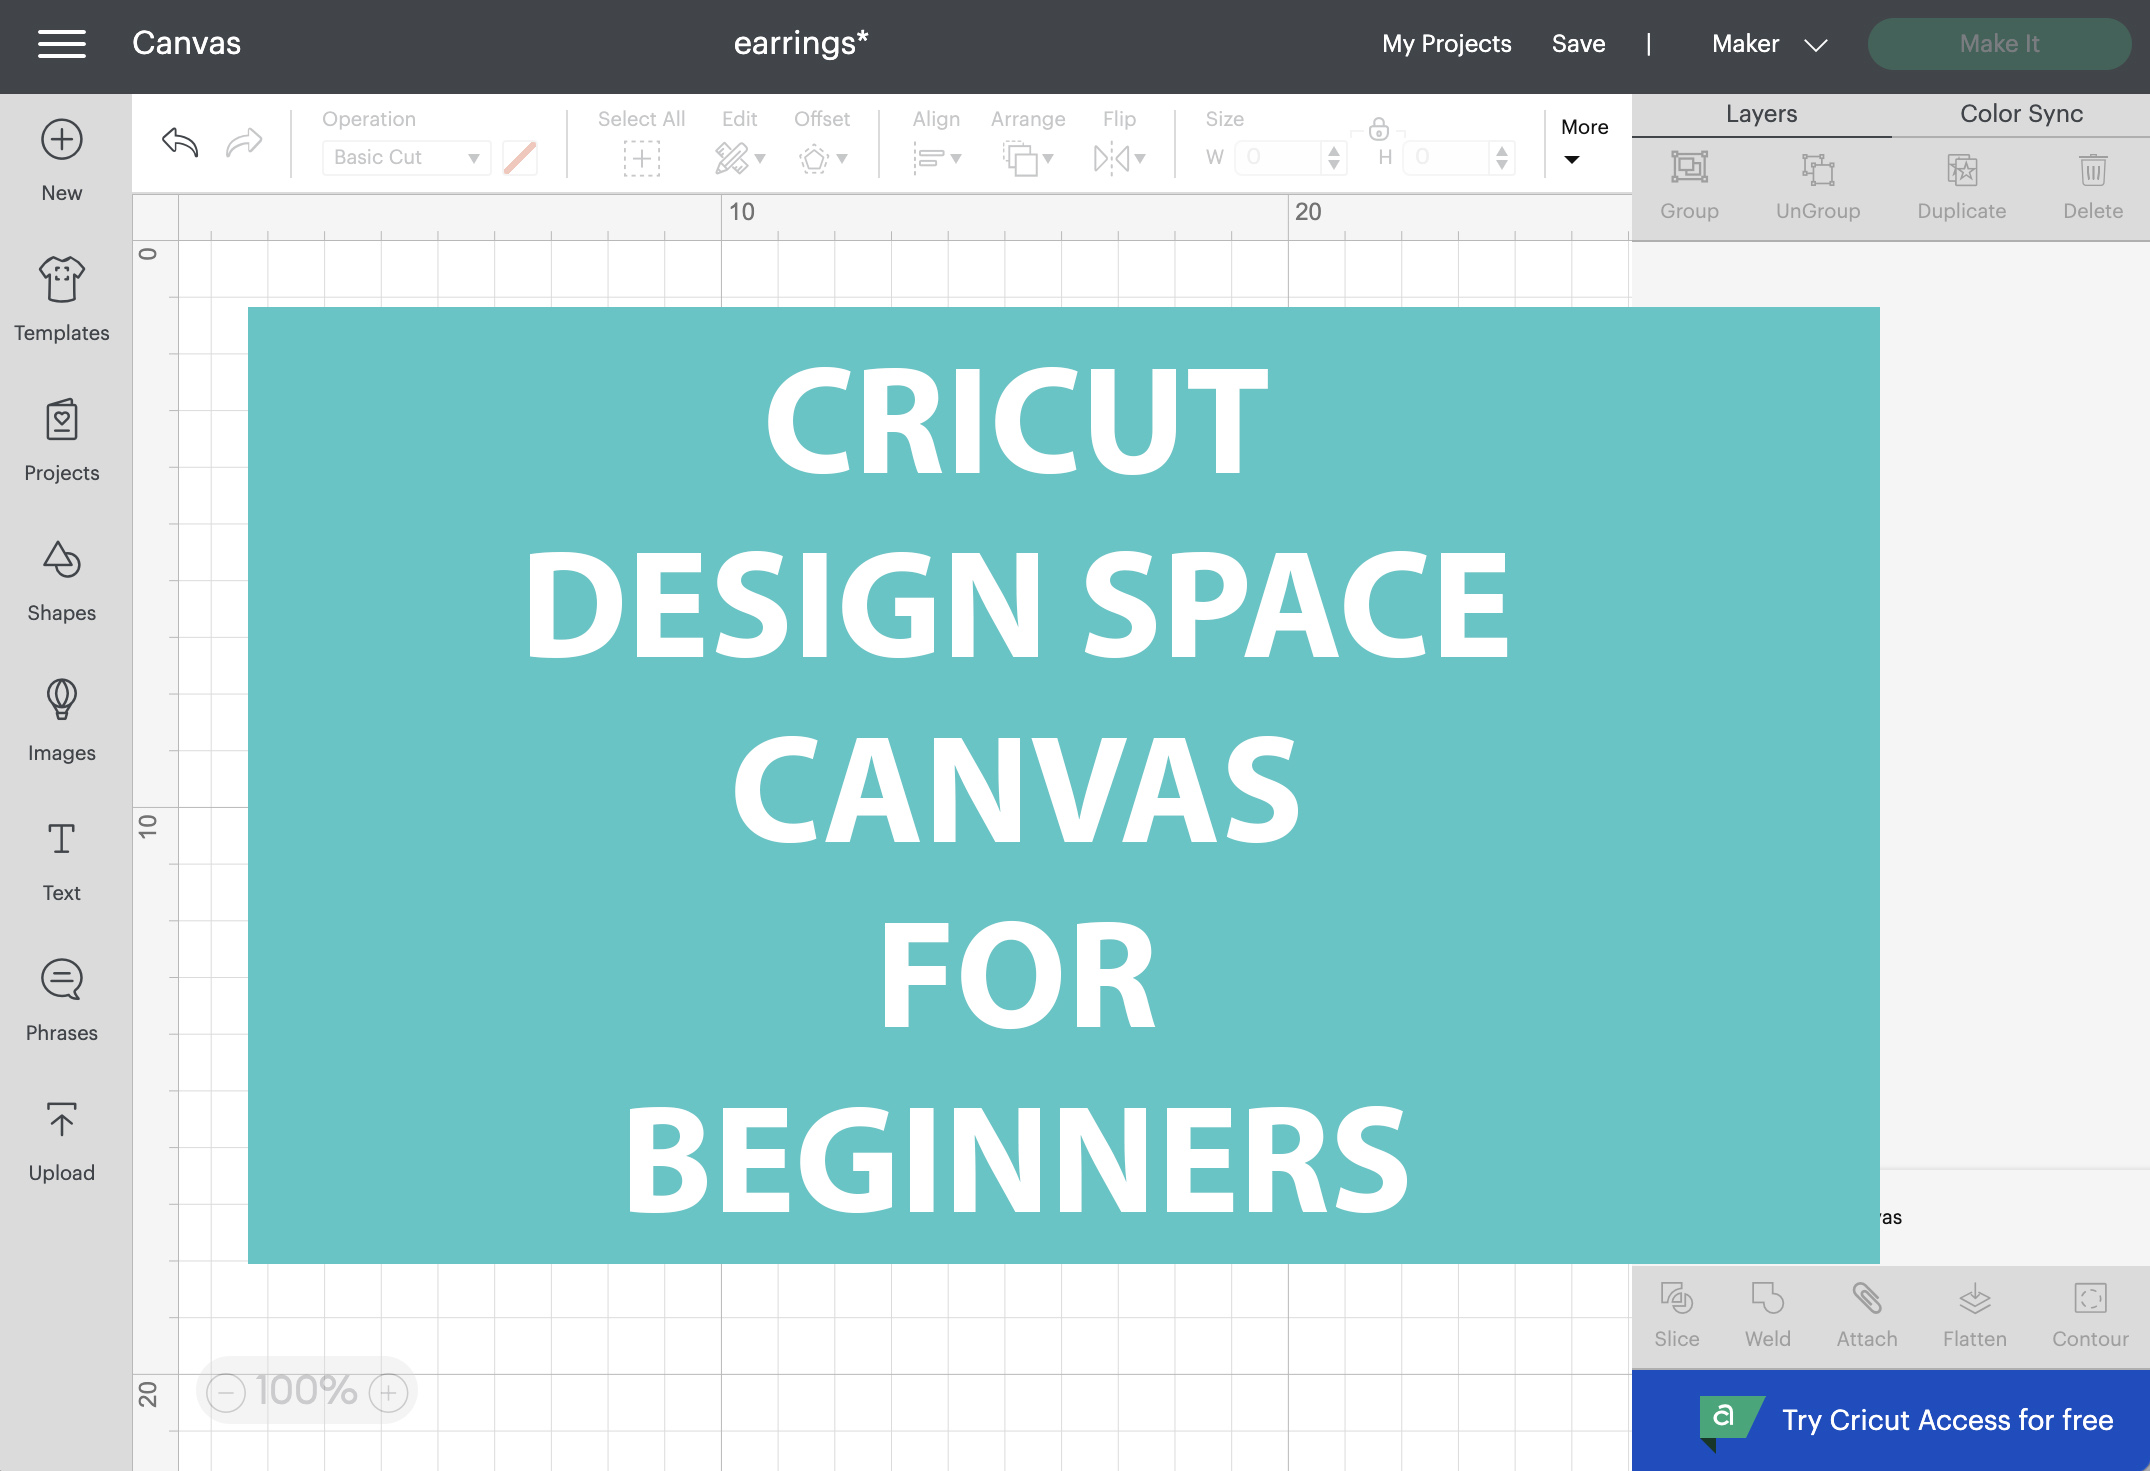 Cricut design space Canvas for beginners